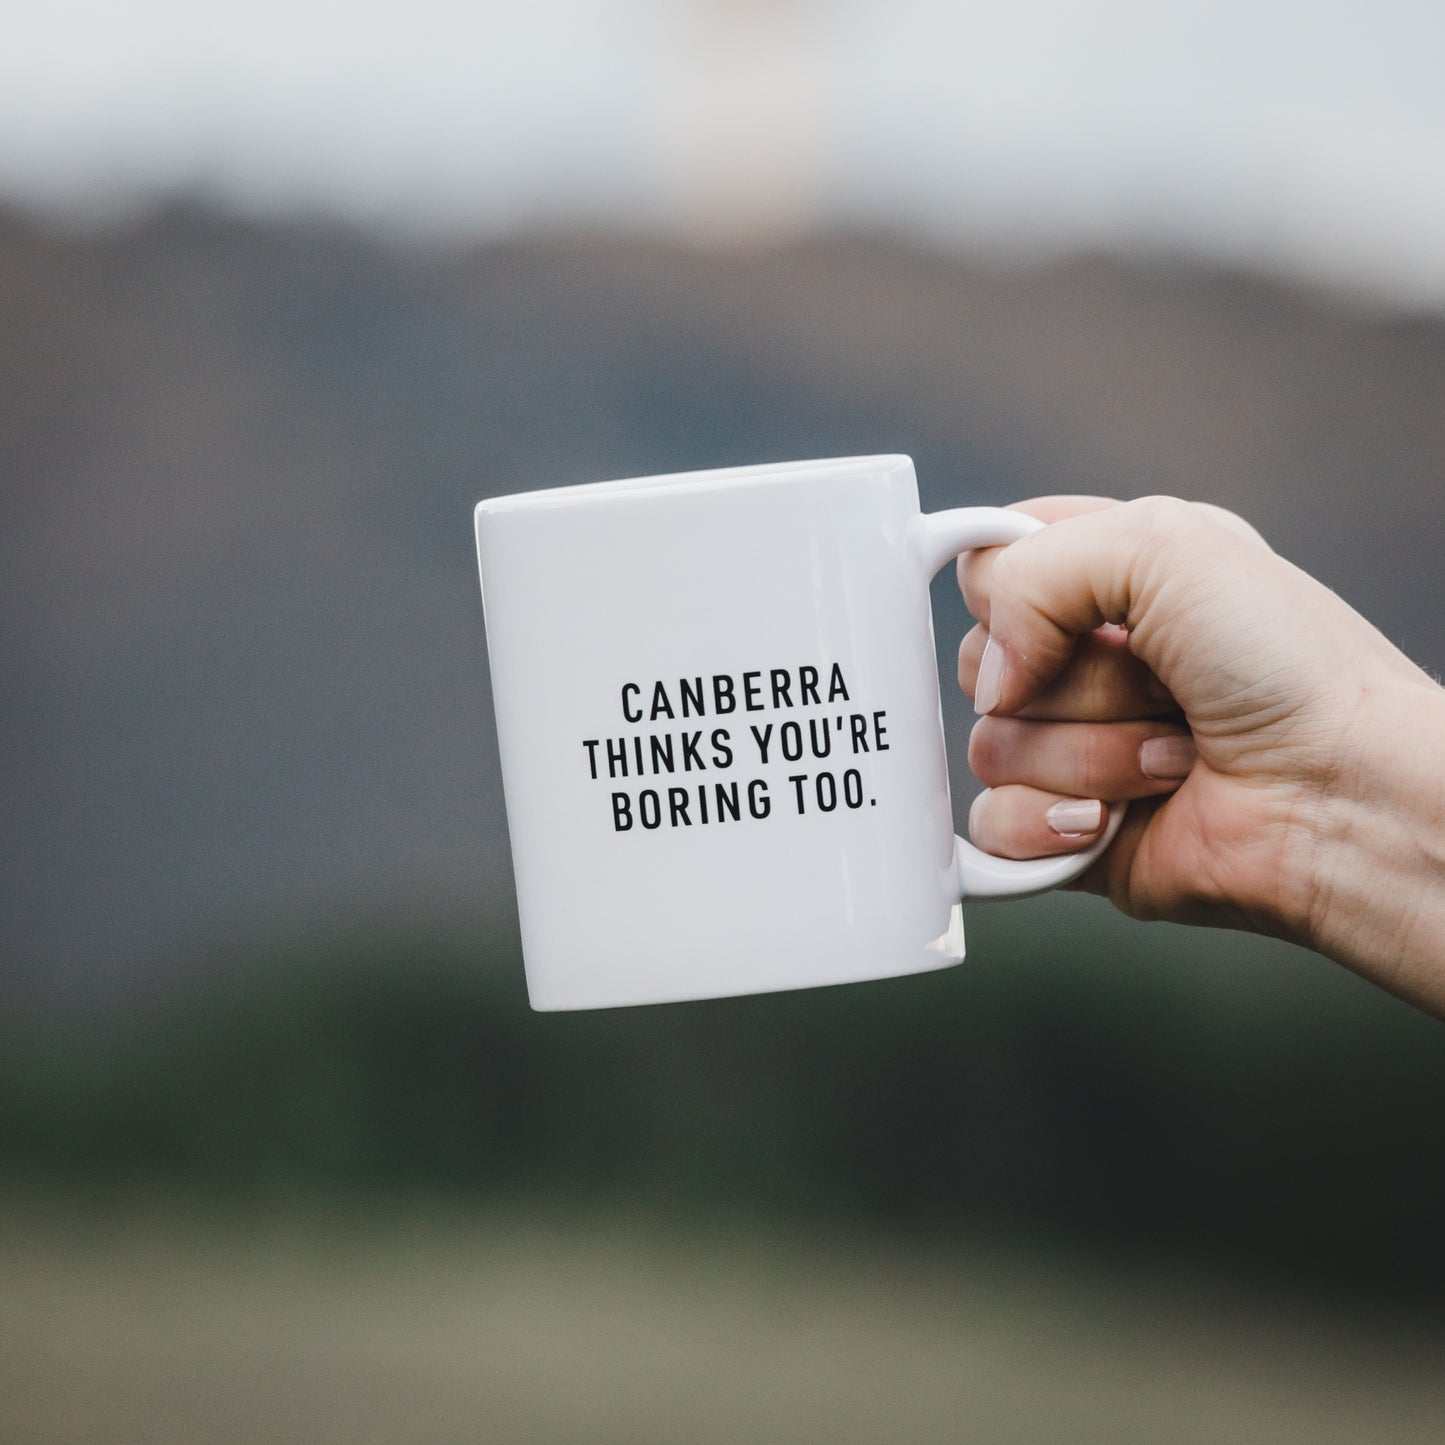 Canberra Thinks You're Boring Too Mug